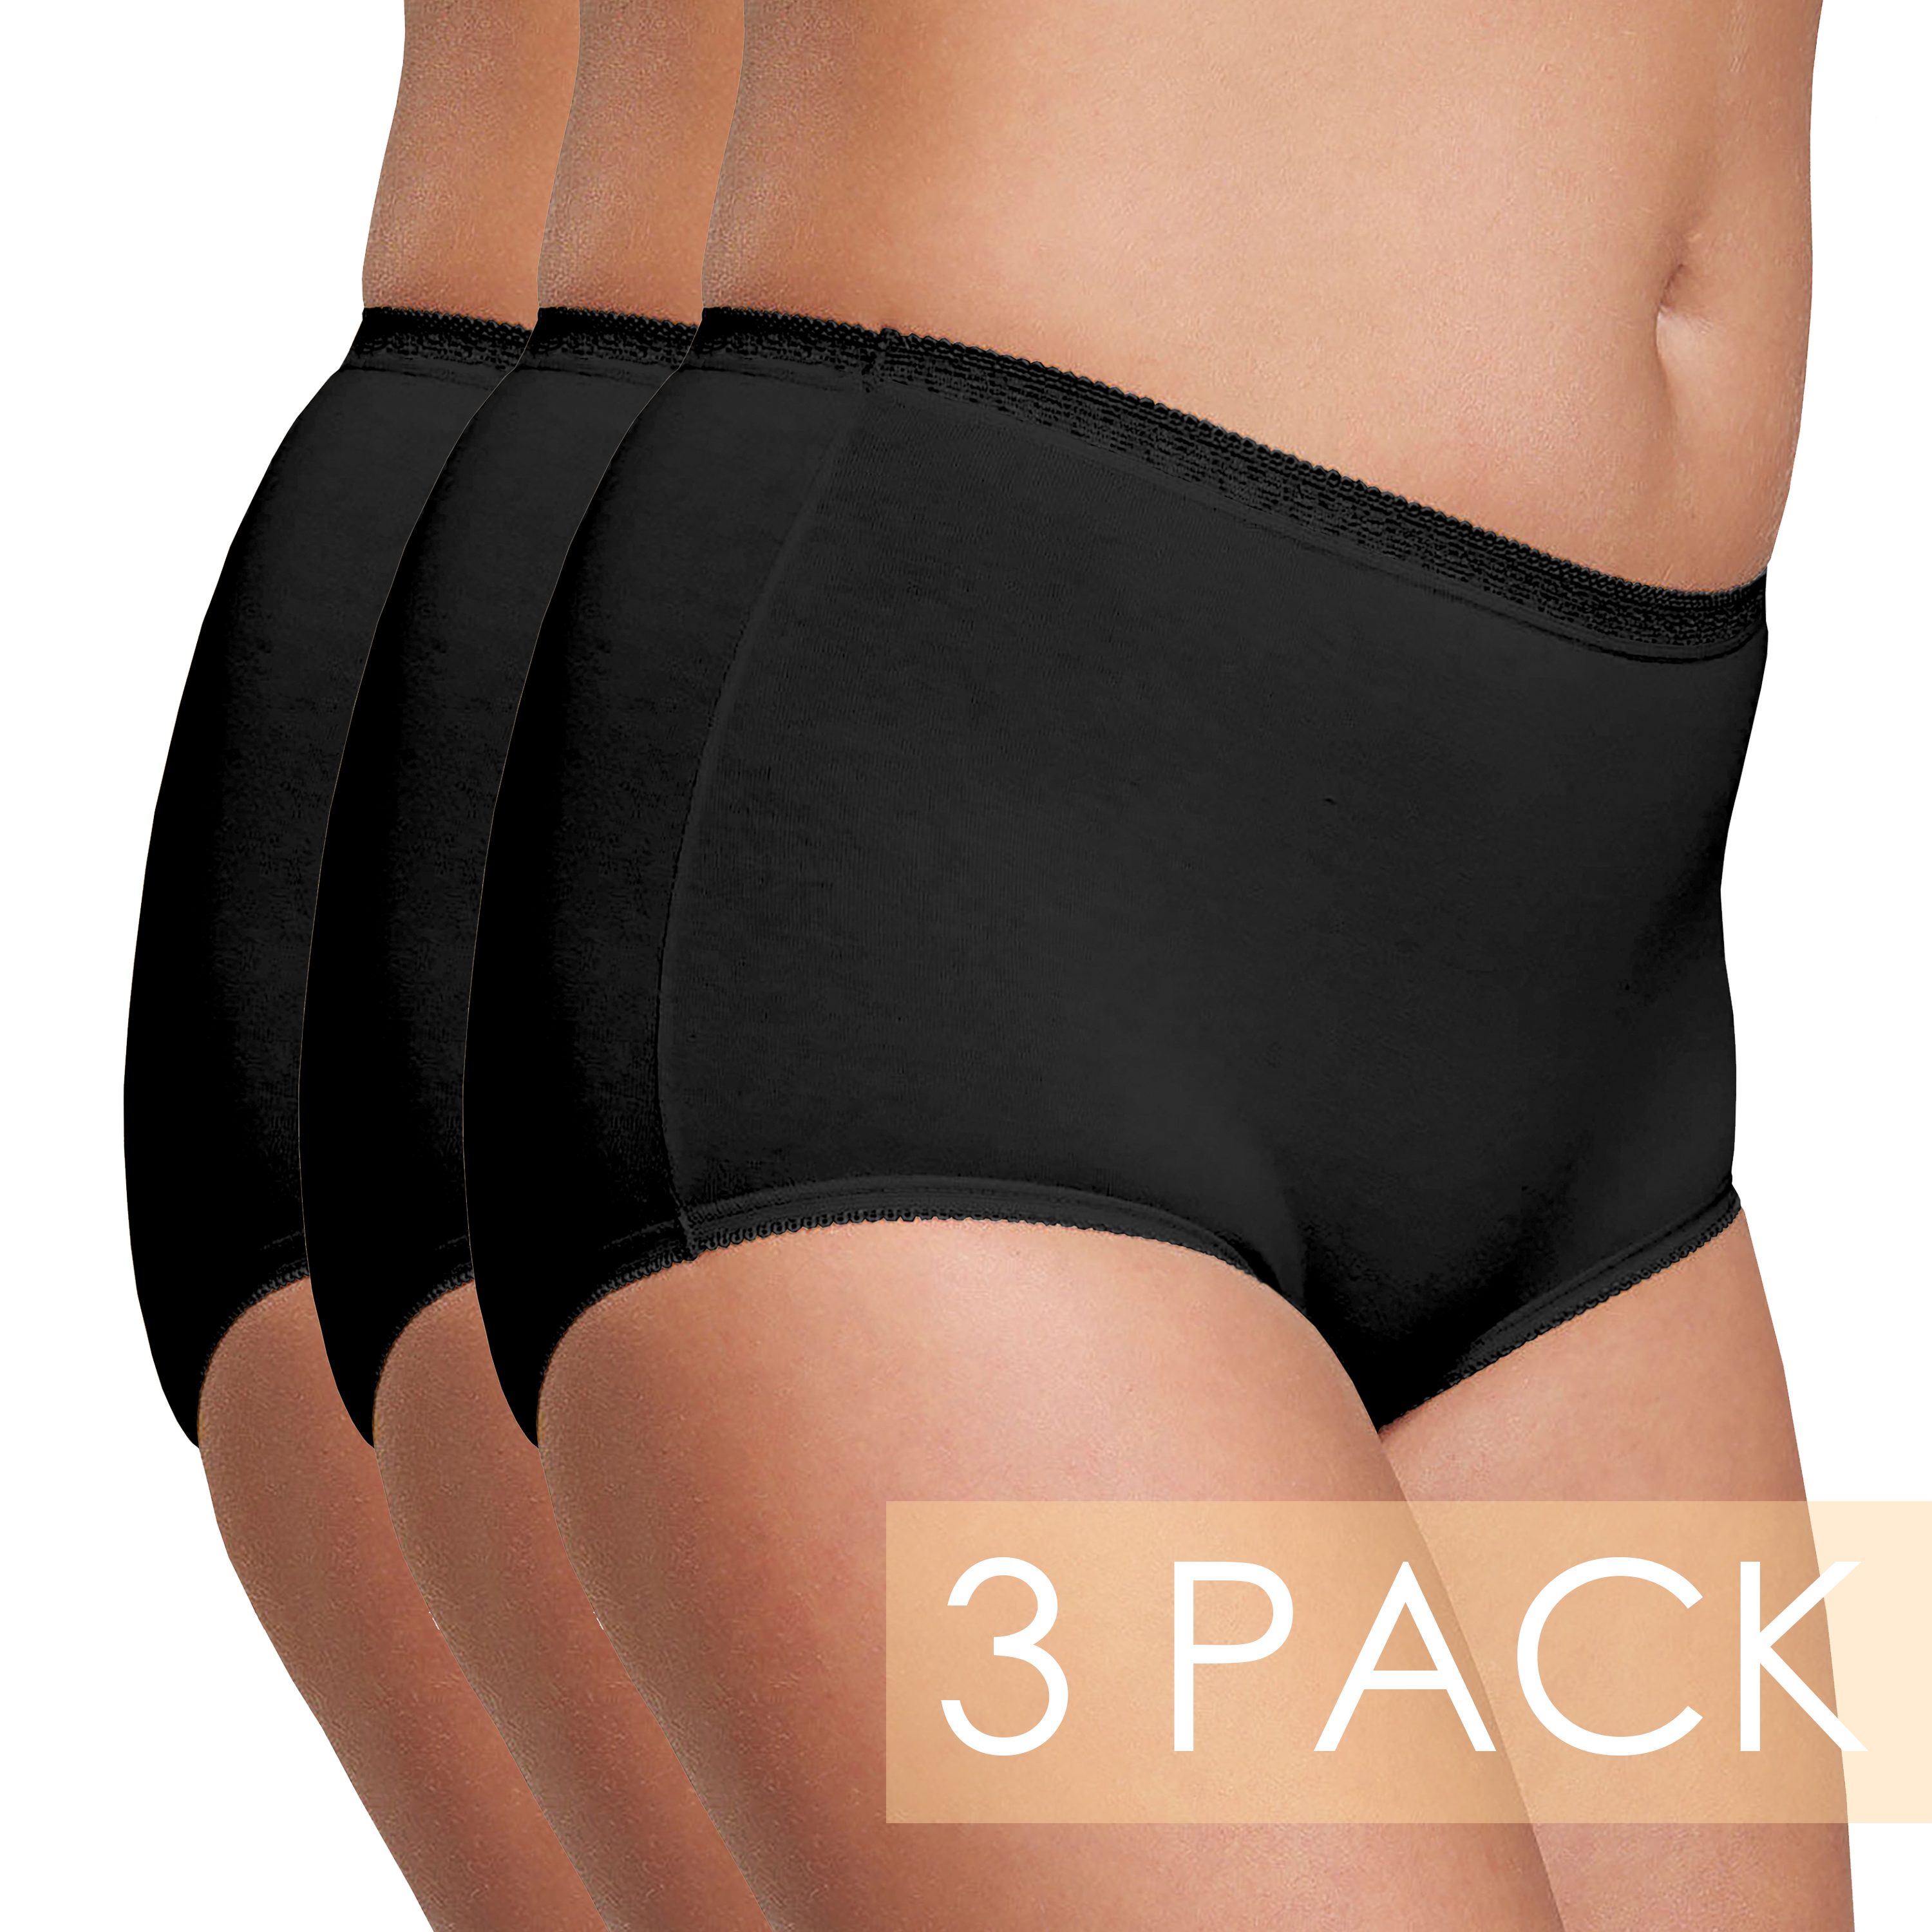 Ladies 3 Pack Lace High Leg Briefs Cotton Underwear Size 12 14 16 18 20 22  24 UK